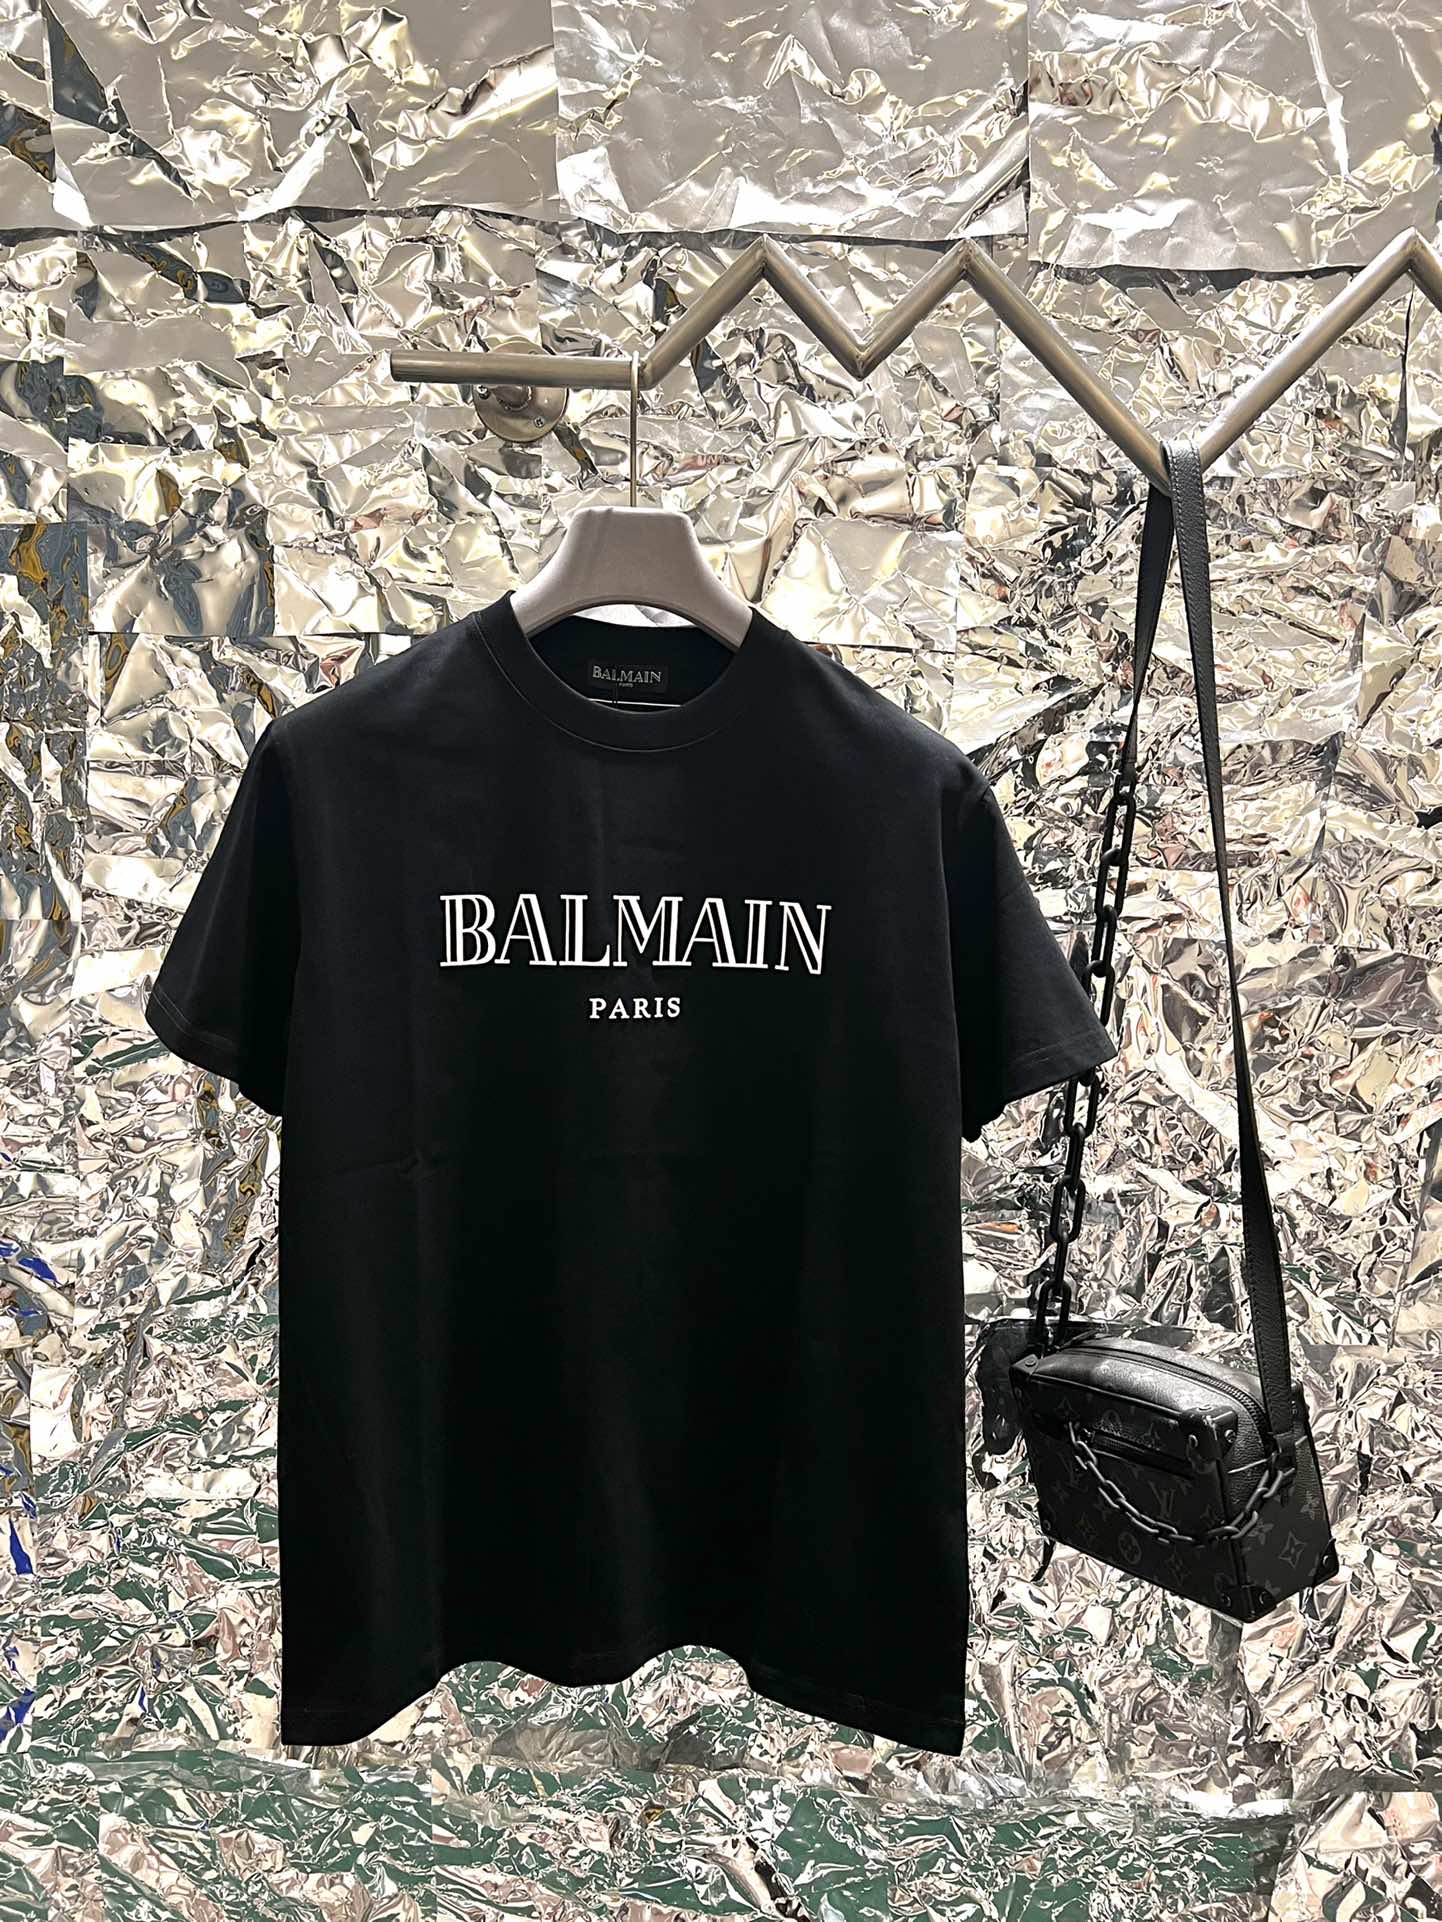 Balmain Summer Cotton Breathable Unisex Fashion T-shirt